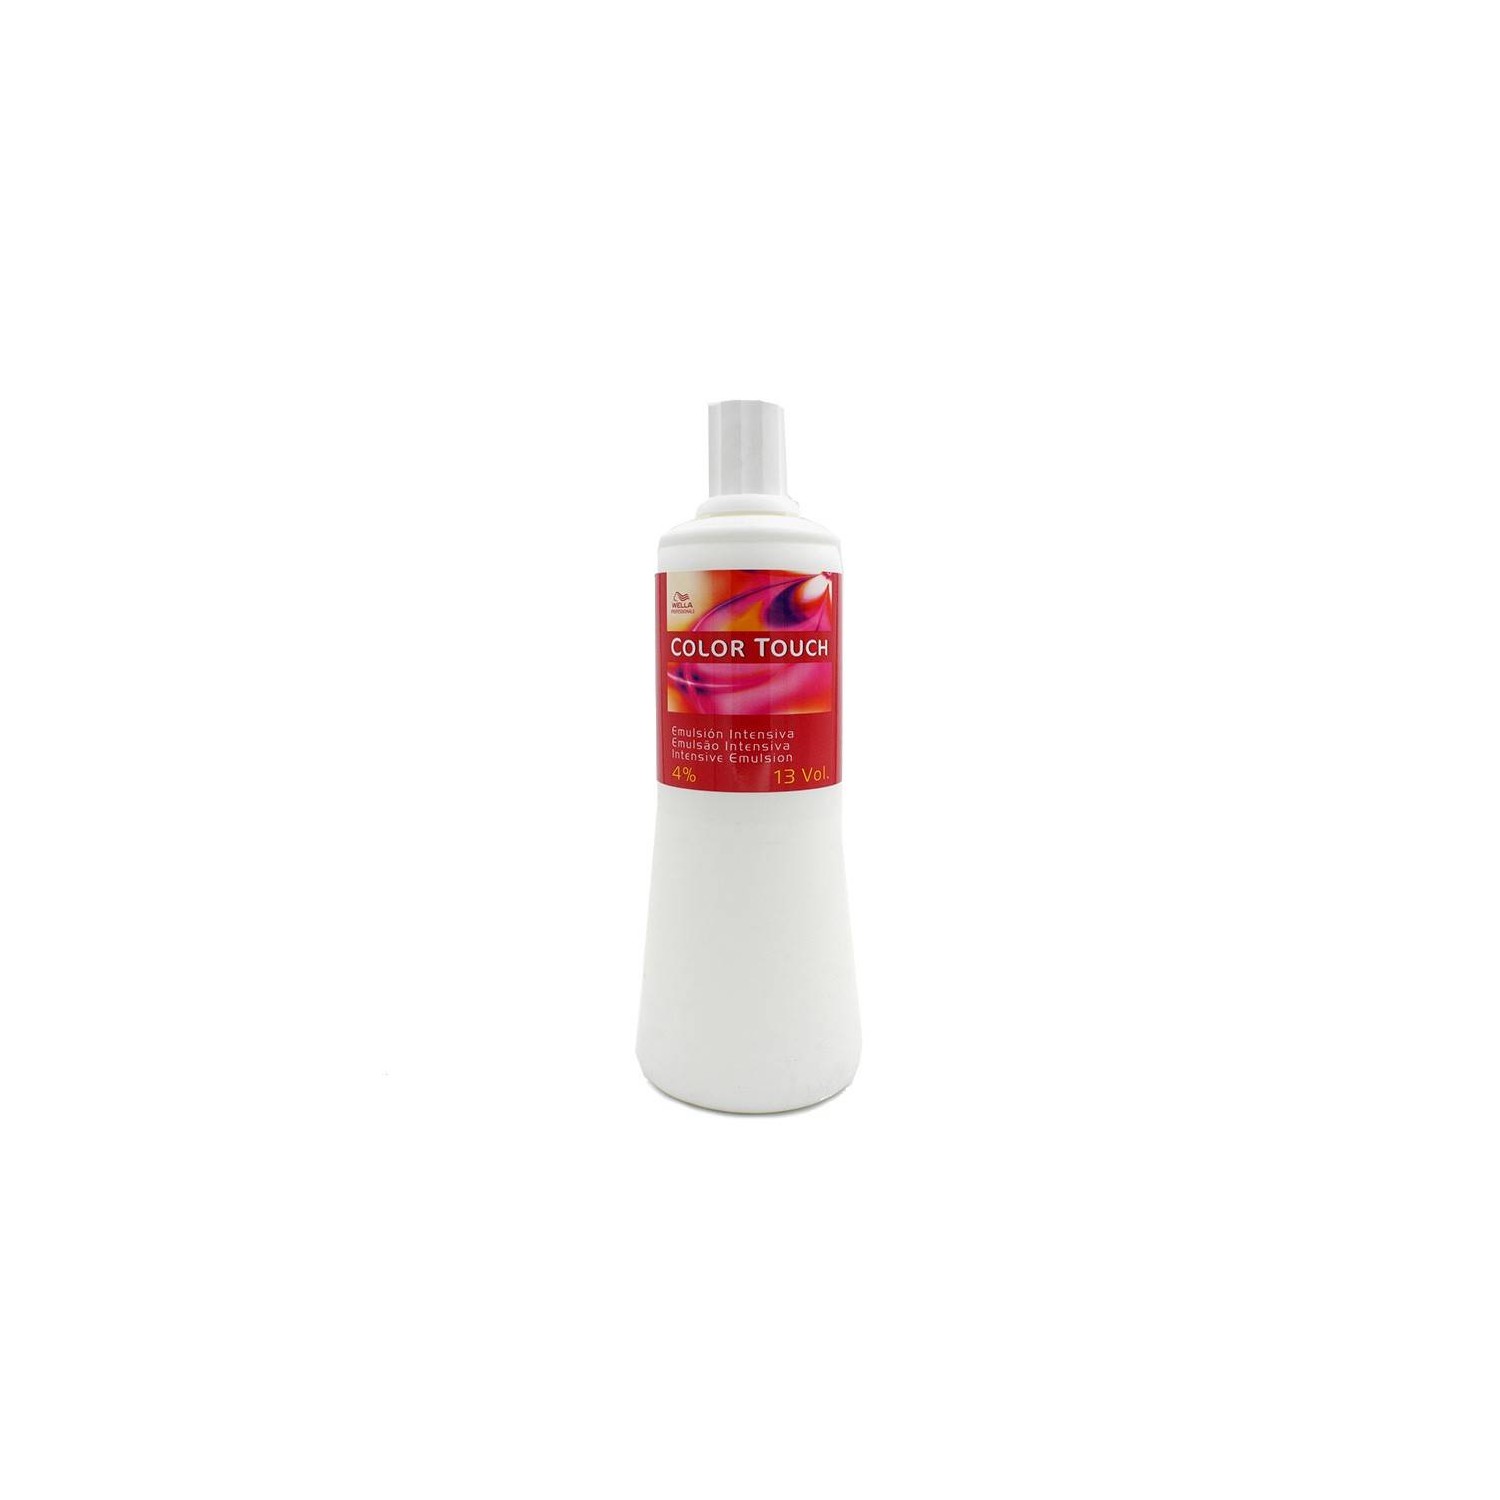 Wella Color Touch Emulsion 13vol (4%) 1000 ml